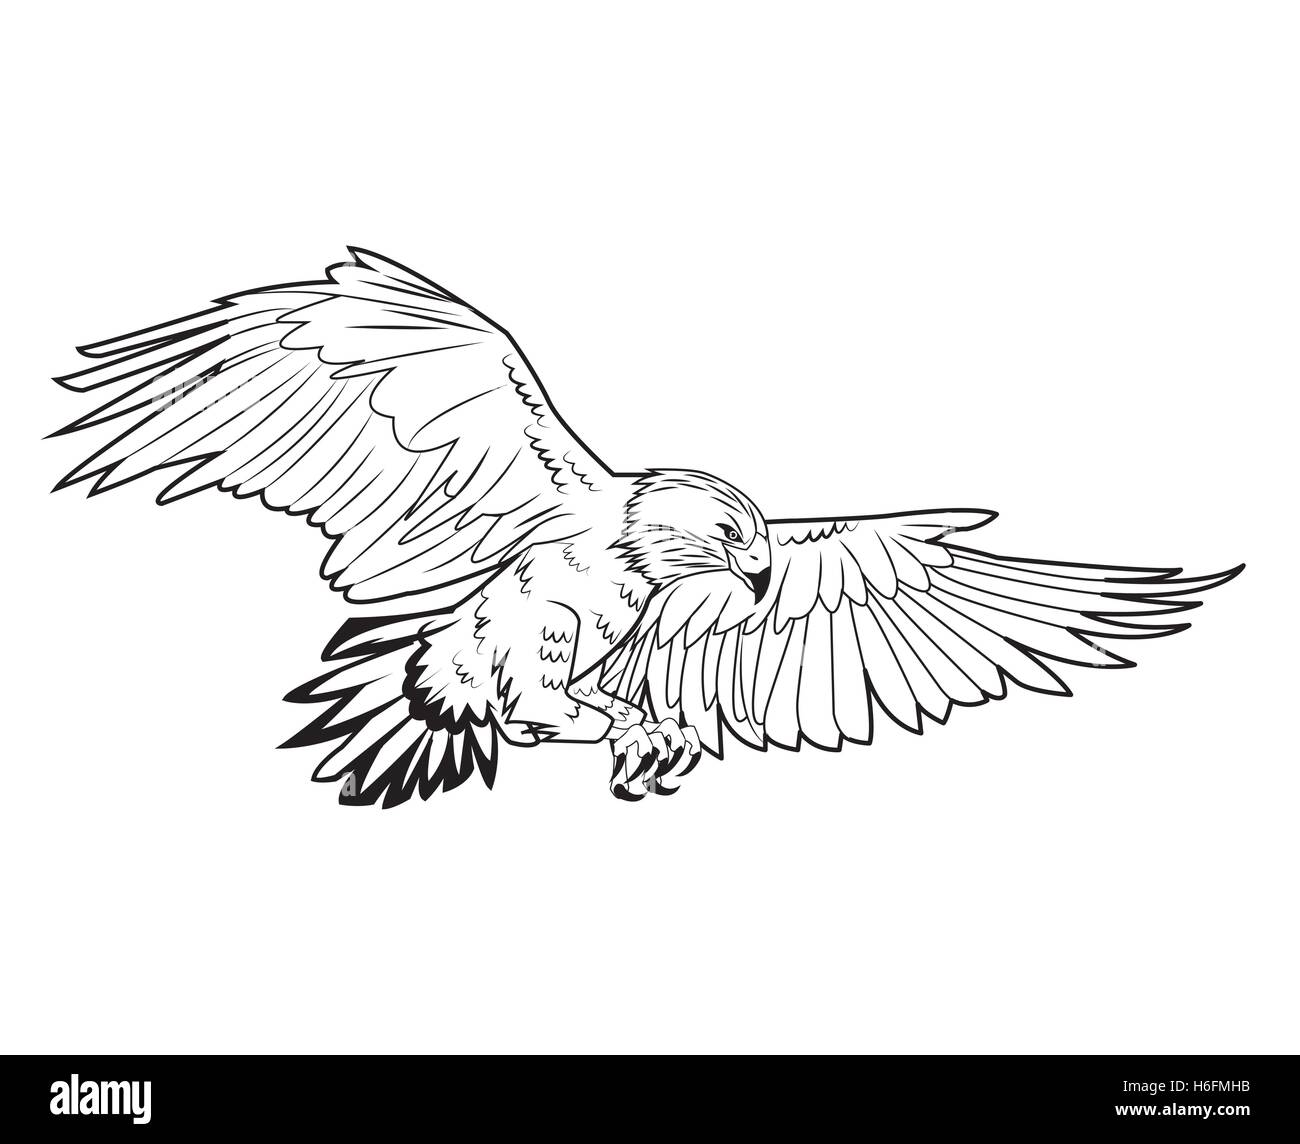 Premium Photo | Eagle tattoo design digital illustration painting artwork